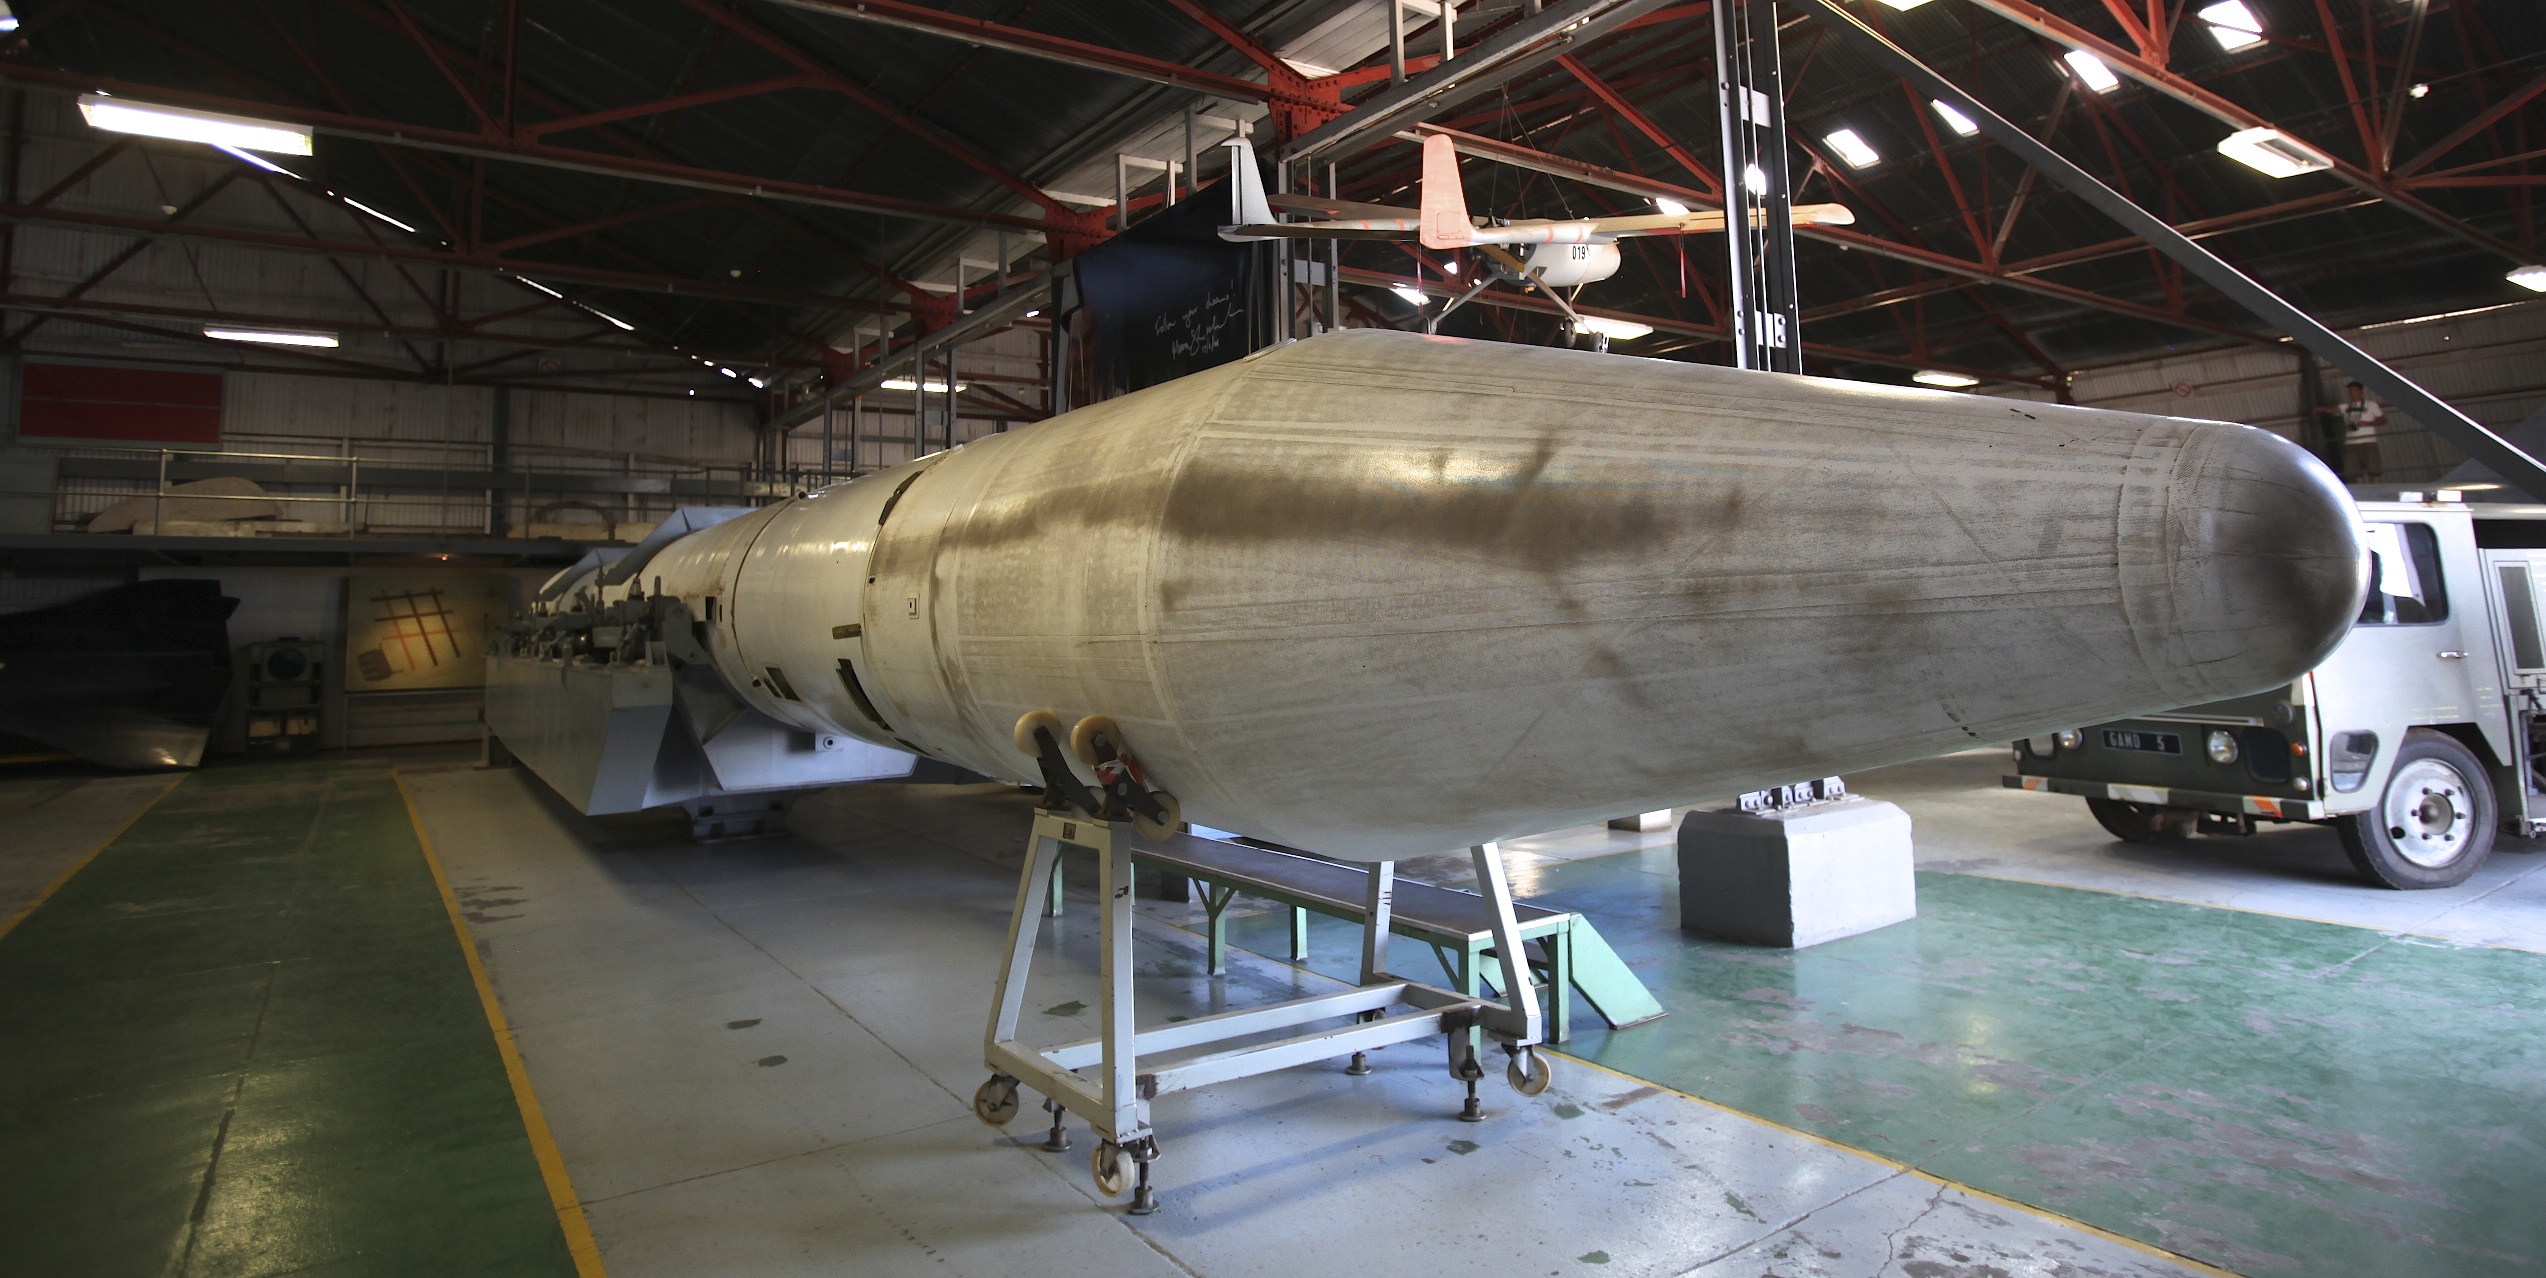 RSA-3 LEO Rocket. SAAF museum, Swartkop, Pretoria